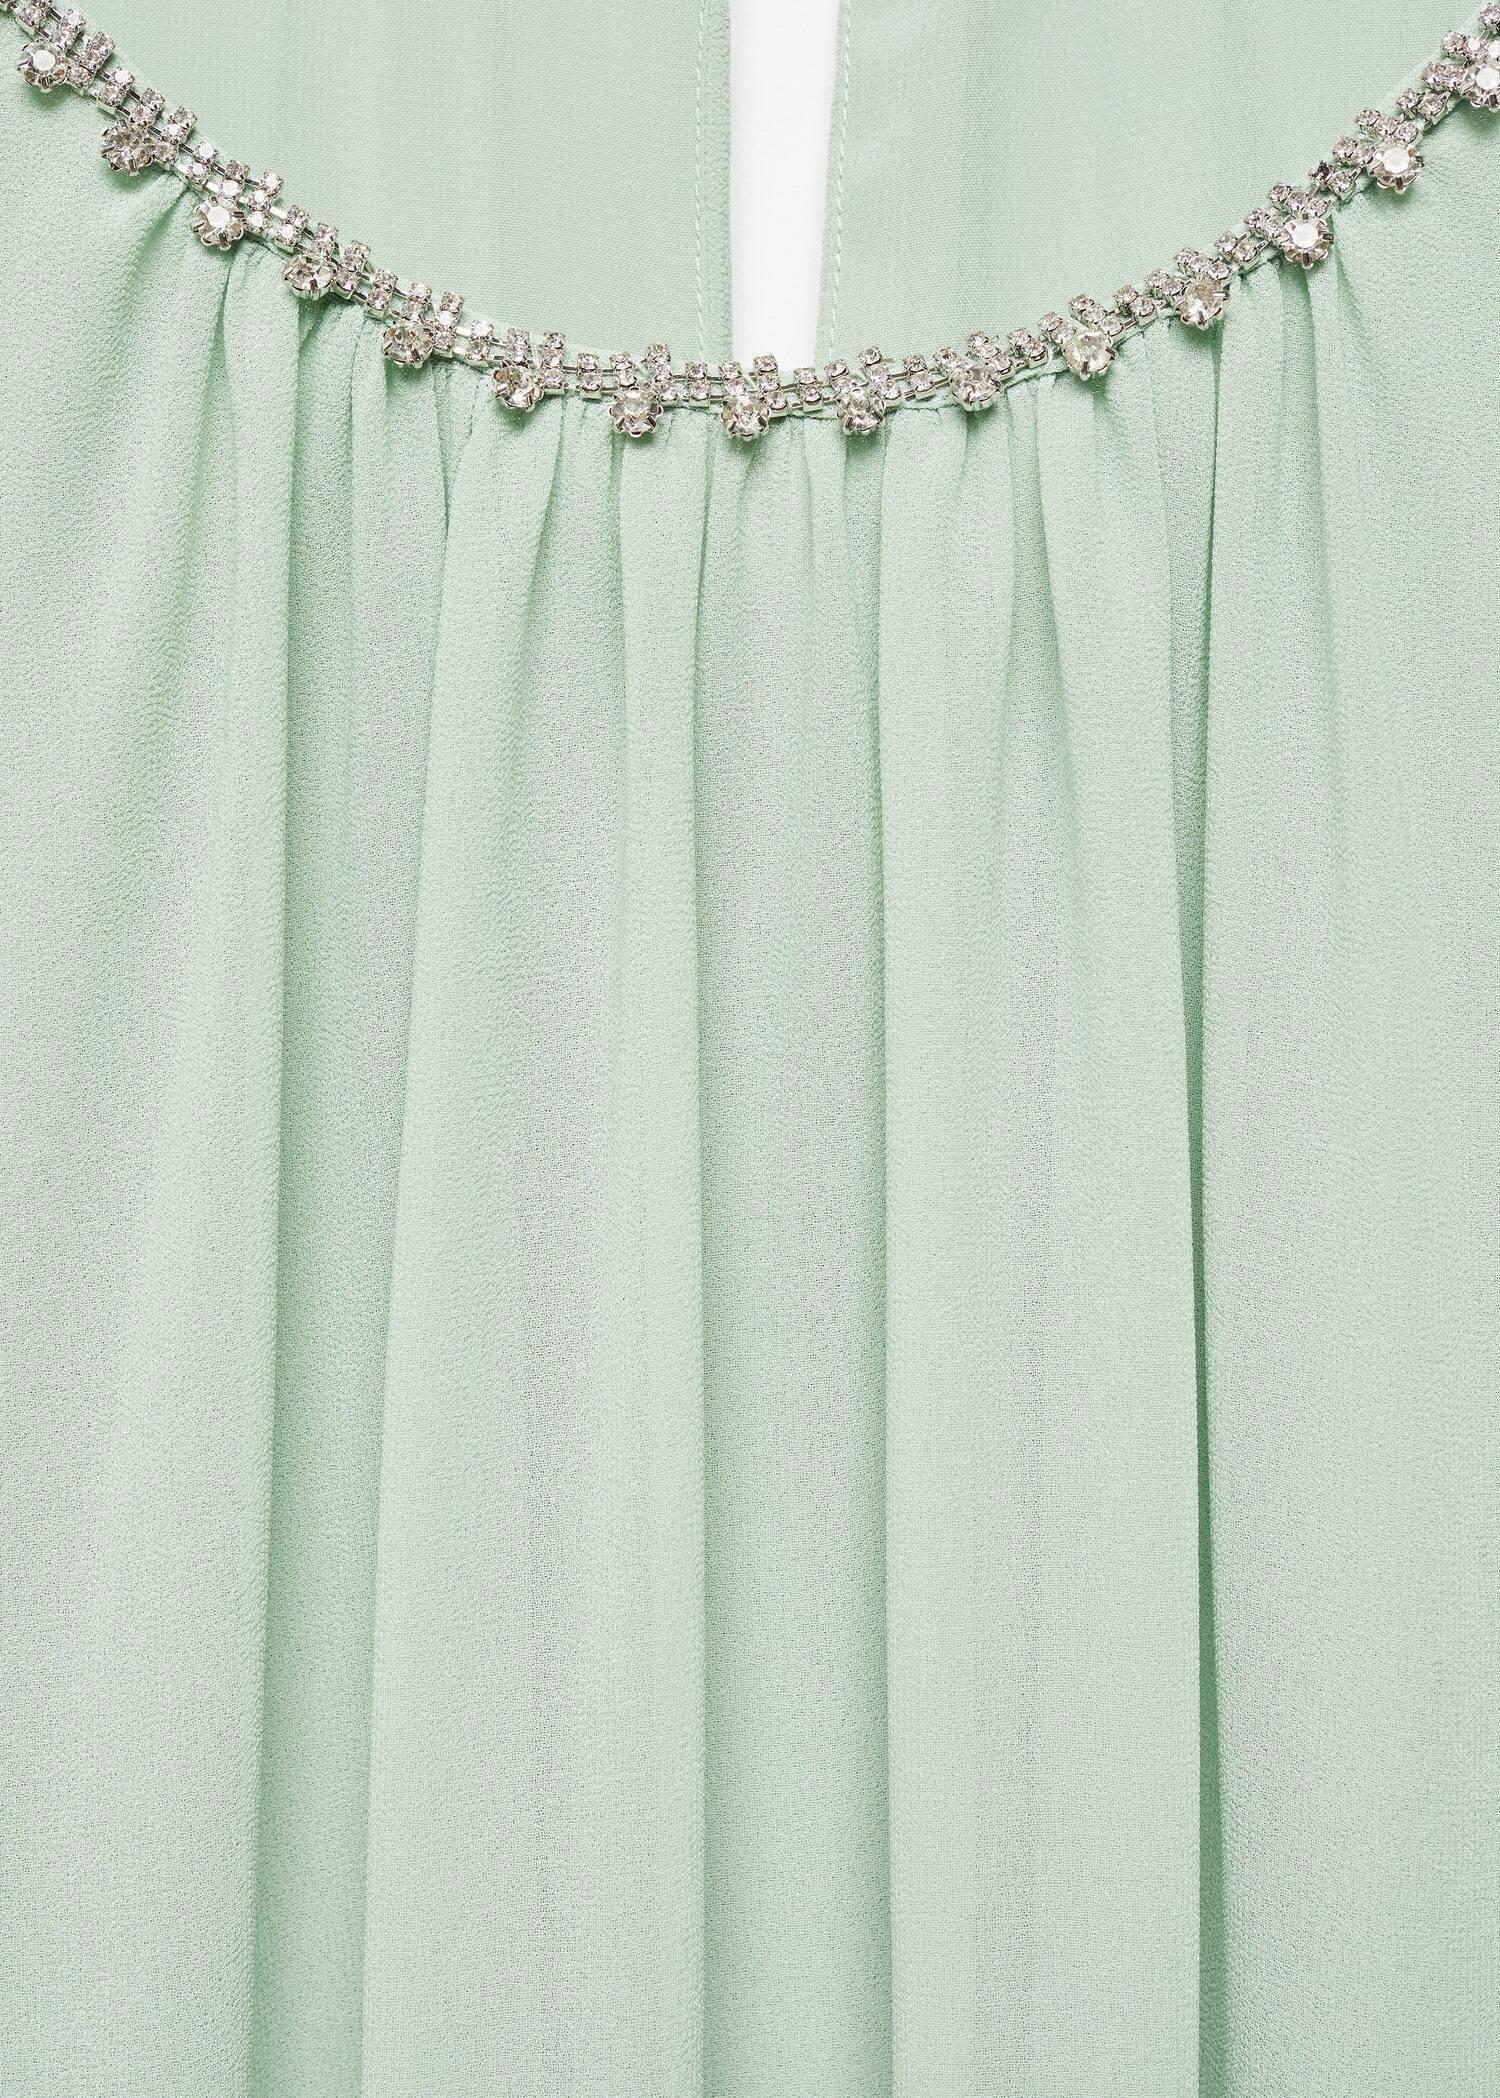 Mango - Green Sleeve Slit Dress